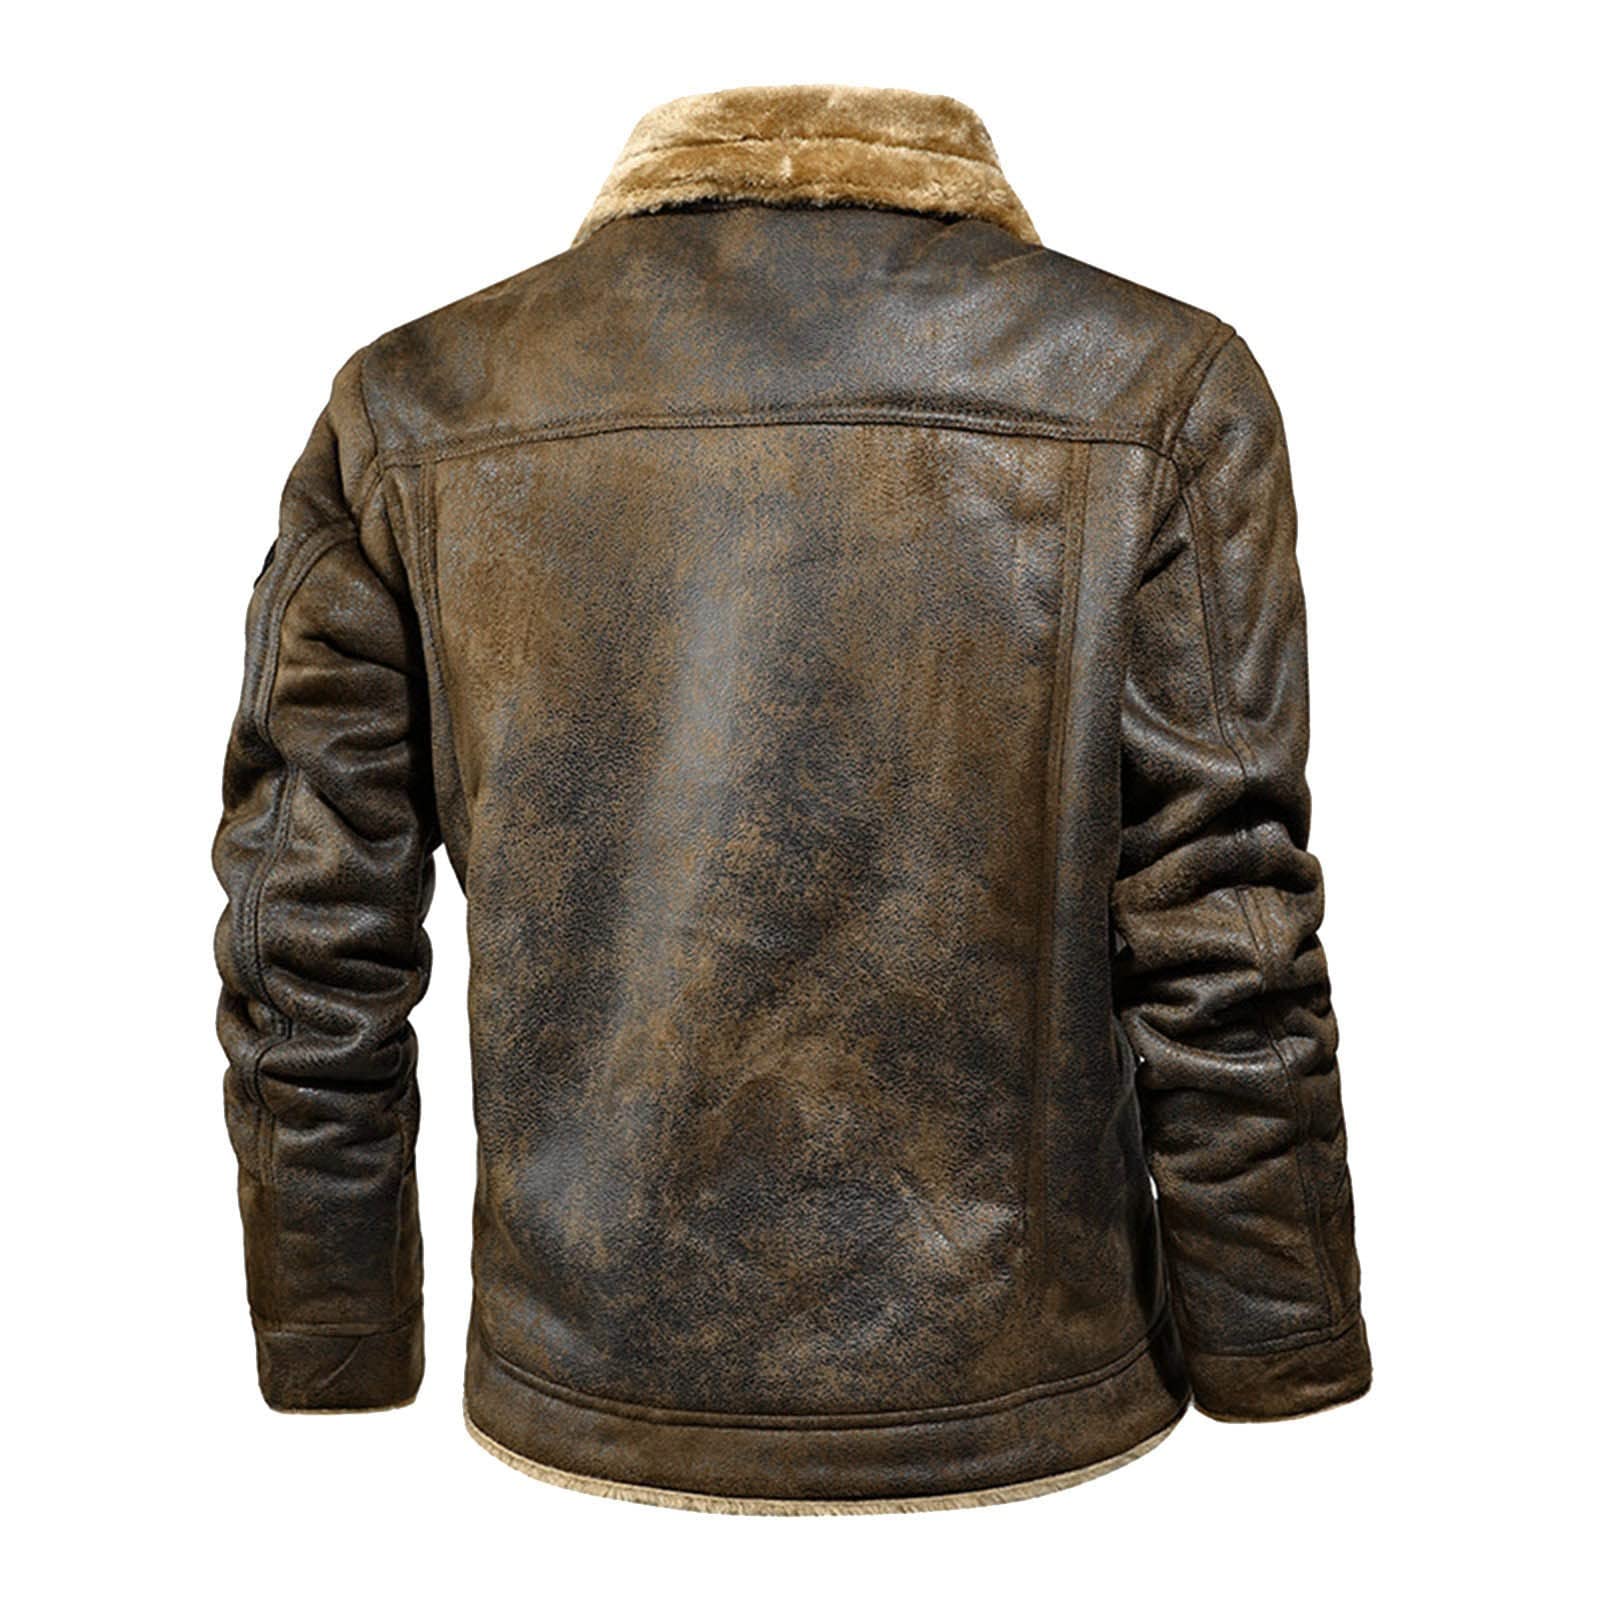 XIAXOGOOL Winter Coat For Men,Bomber Faux Leather Jacket For Men Vintage Turn-Down Collar Sherpa Lining Coat Sport Jackets